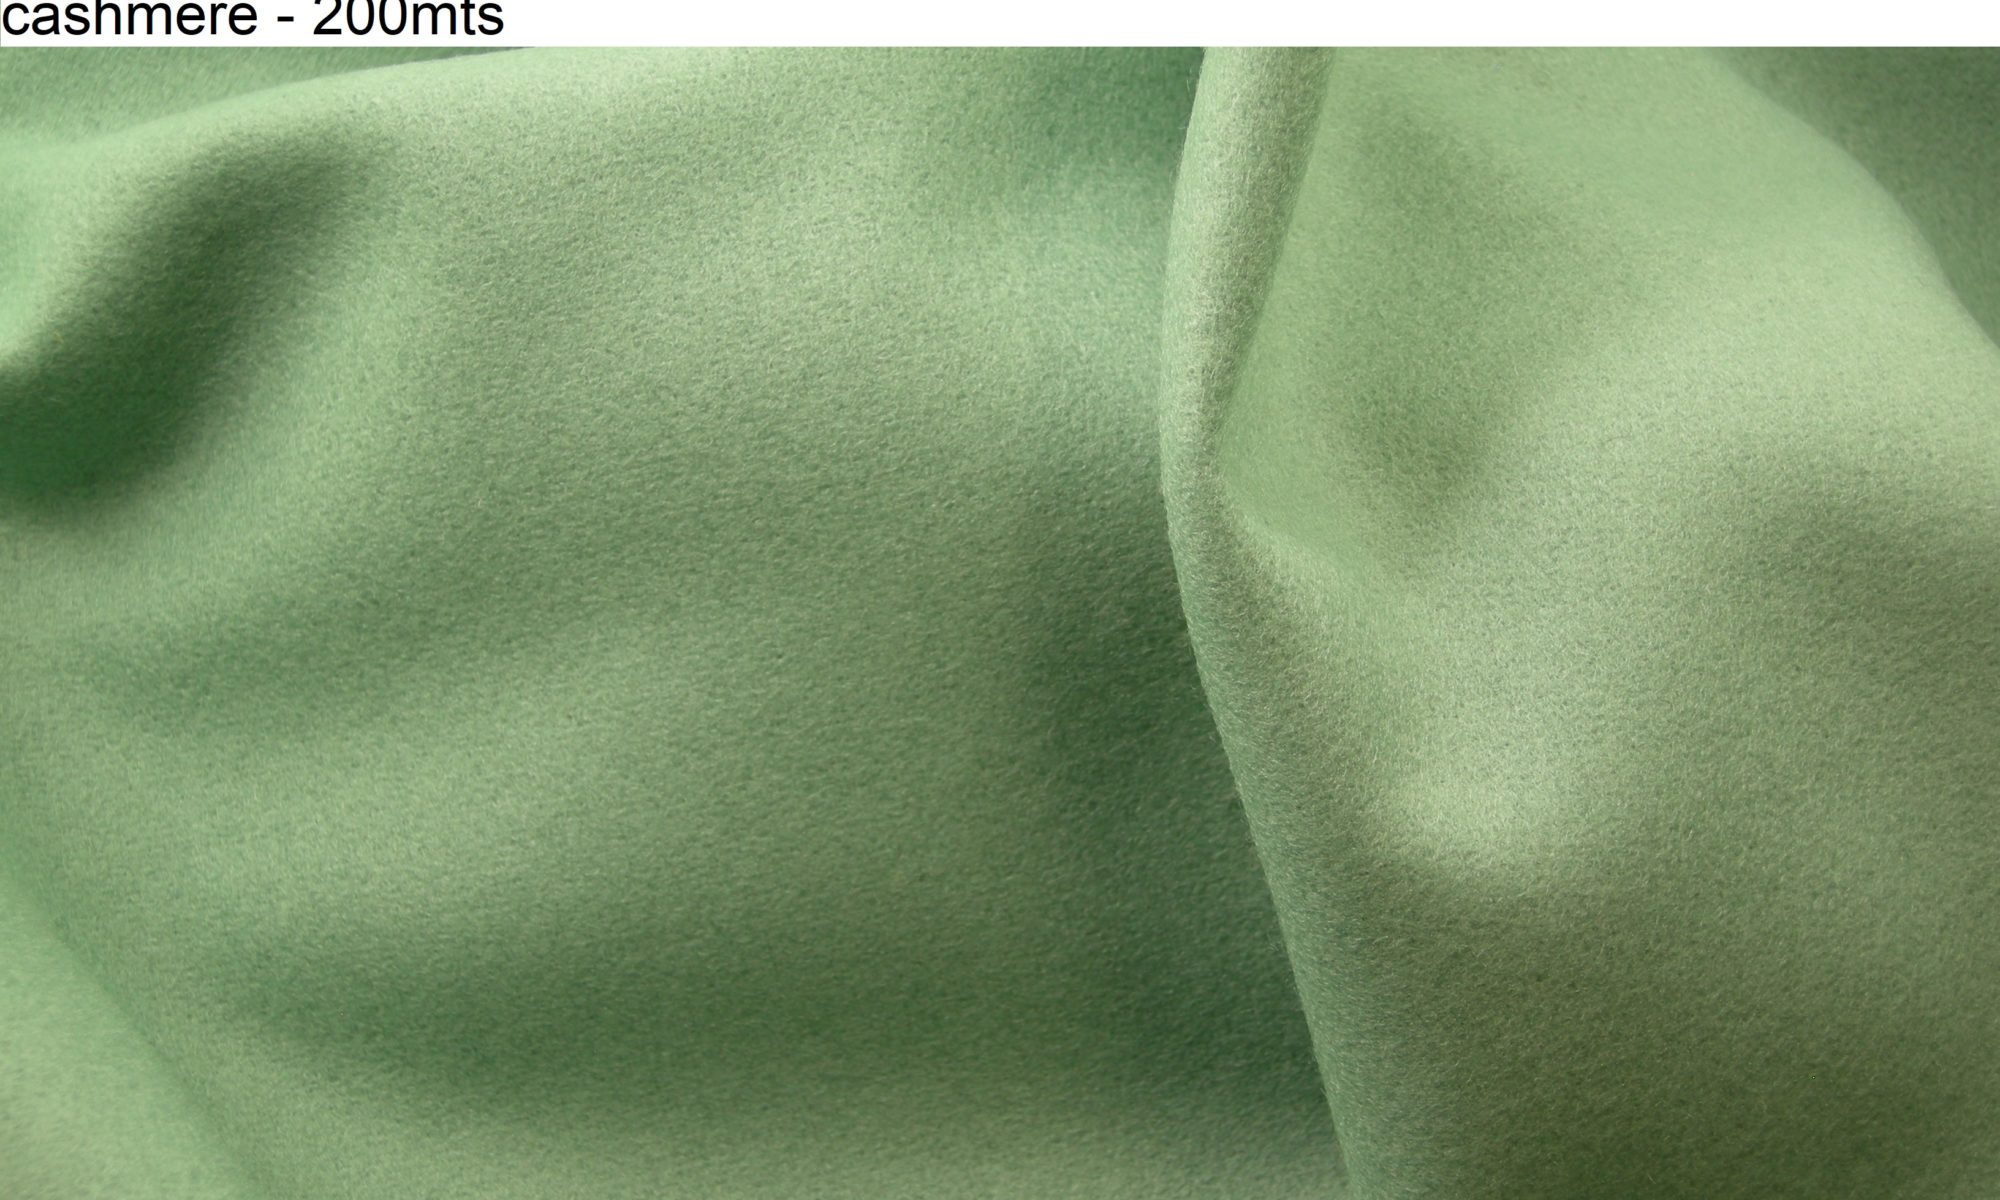 ART 7202 Mint cashmere blend jacket light coat fabric WIDTH cm150 WEIGHT gr400 COMPOSITION 70Virgin wool 25 Nylon polyammide 5 cashmere - 200mts